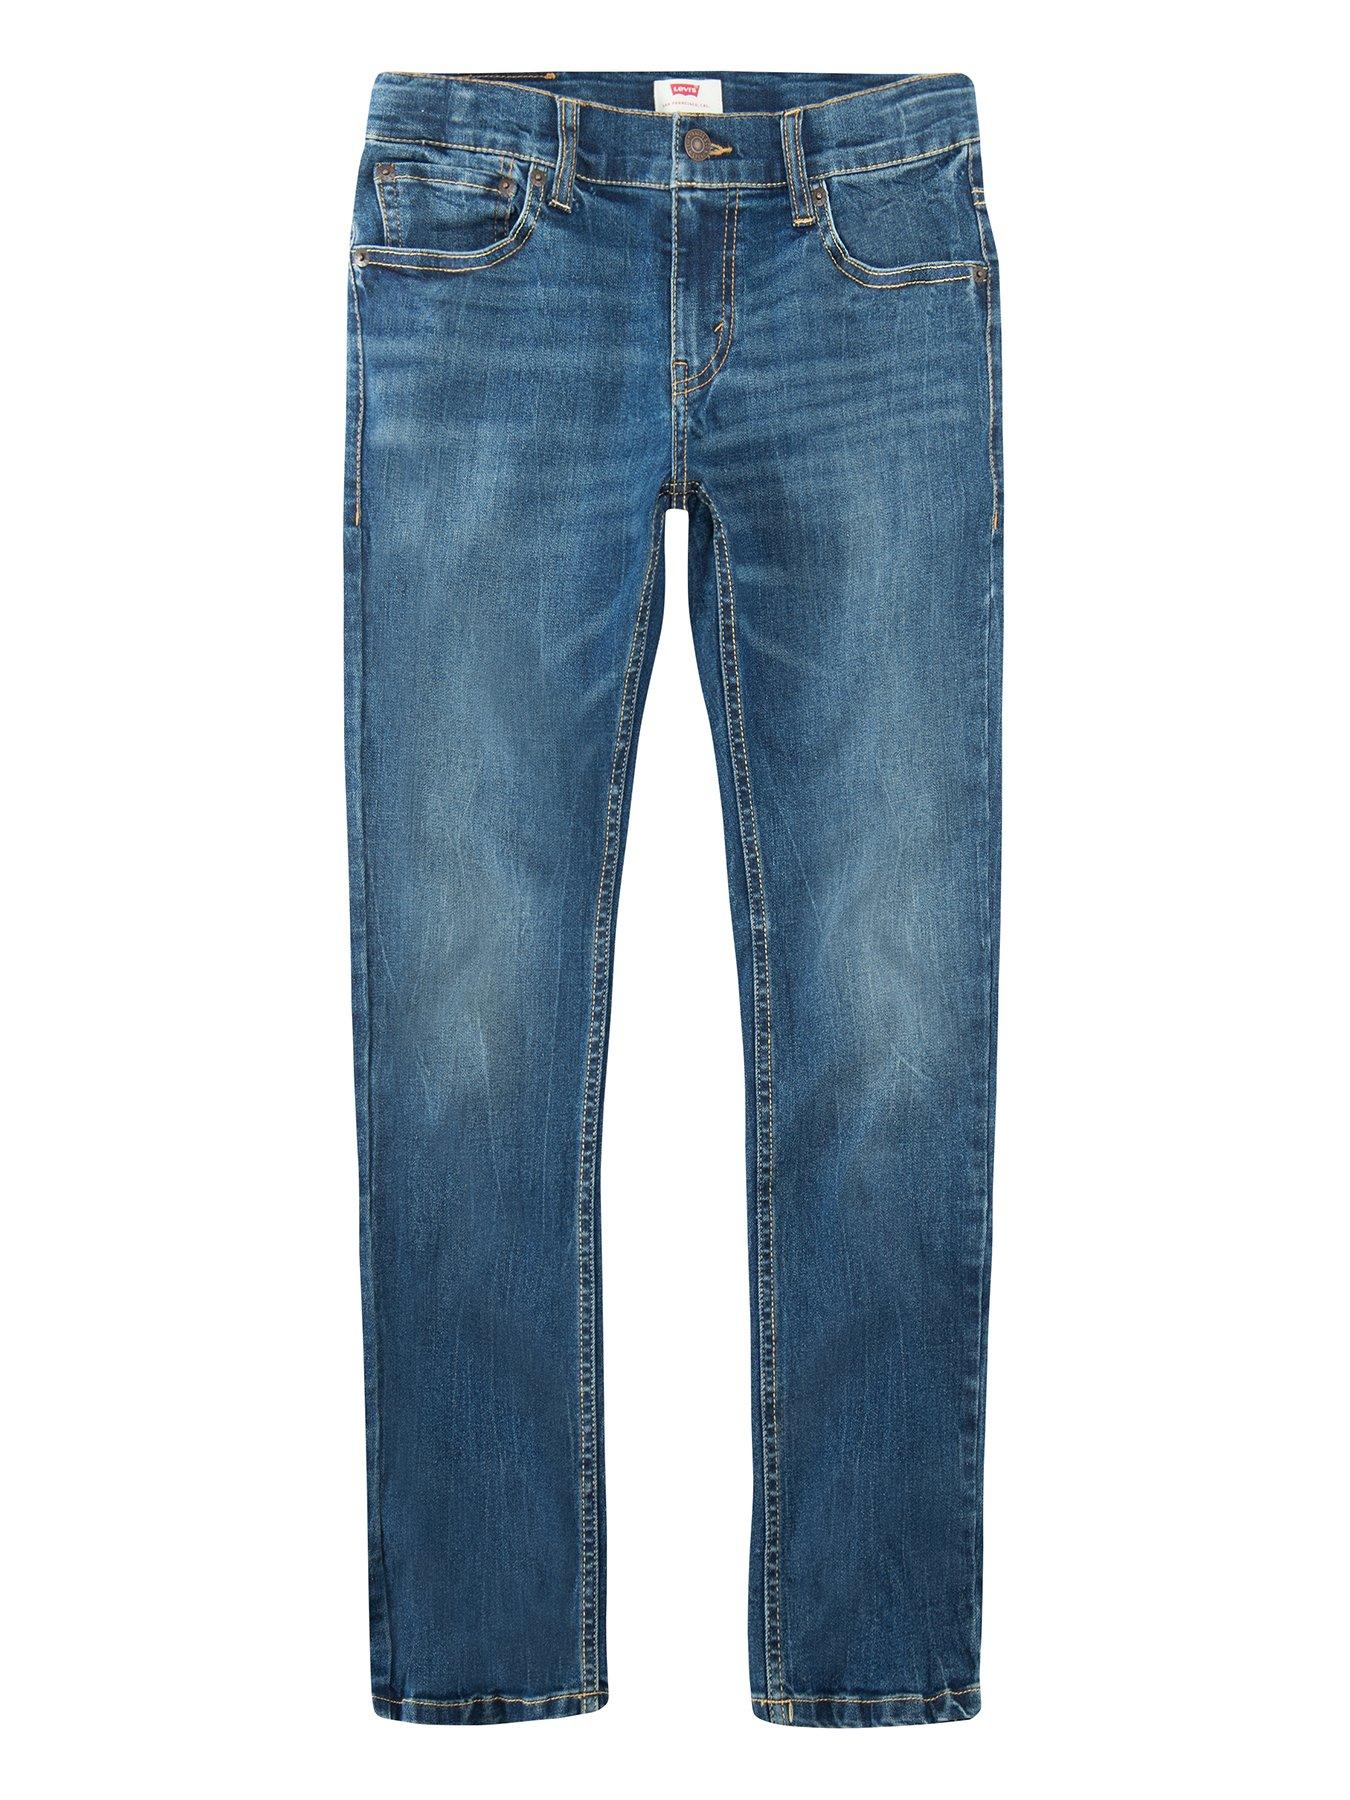  Boys 511 Slim Fit Jeans - Mid Wash